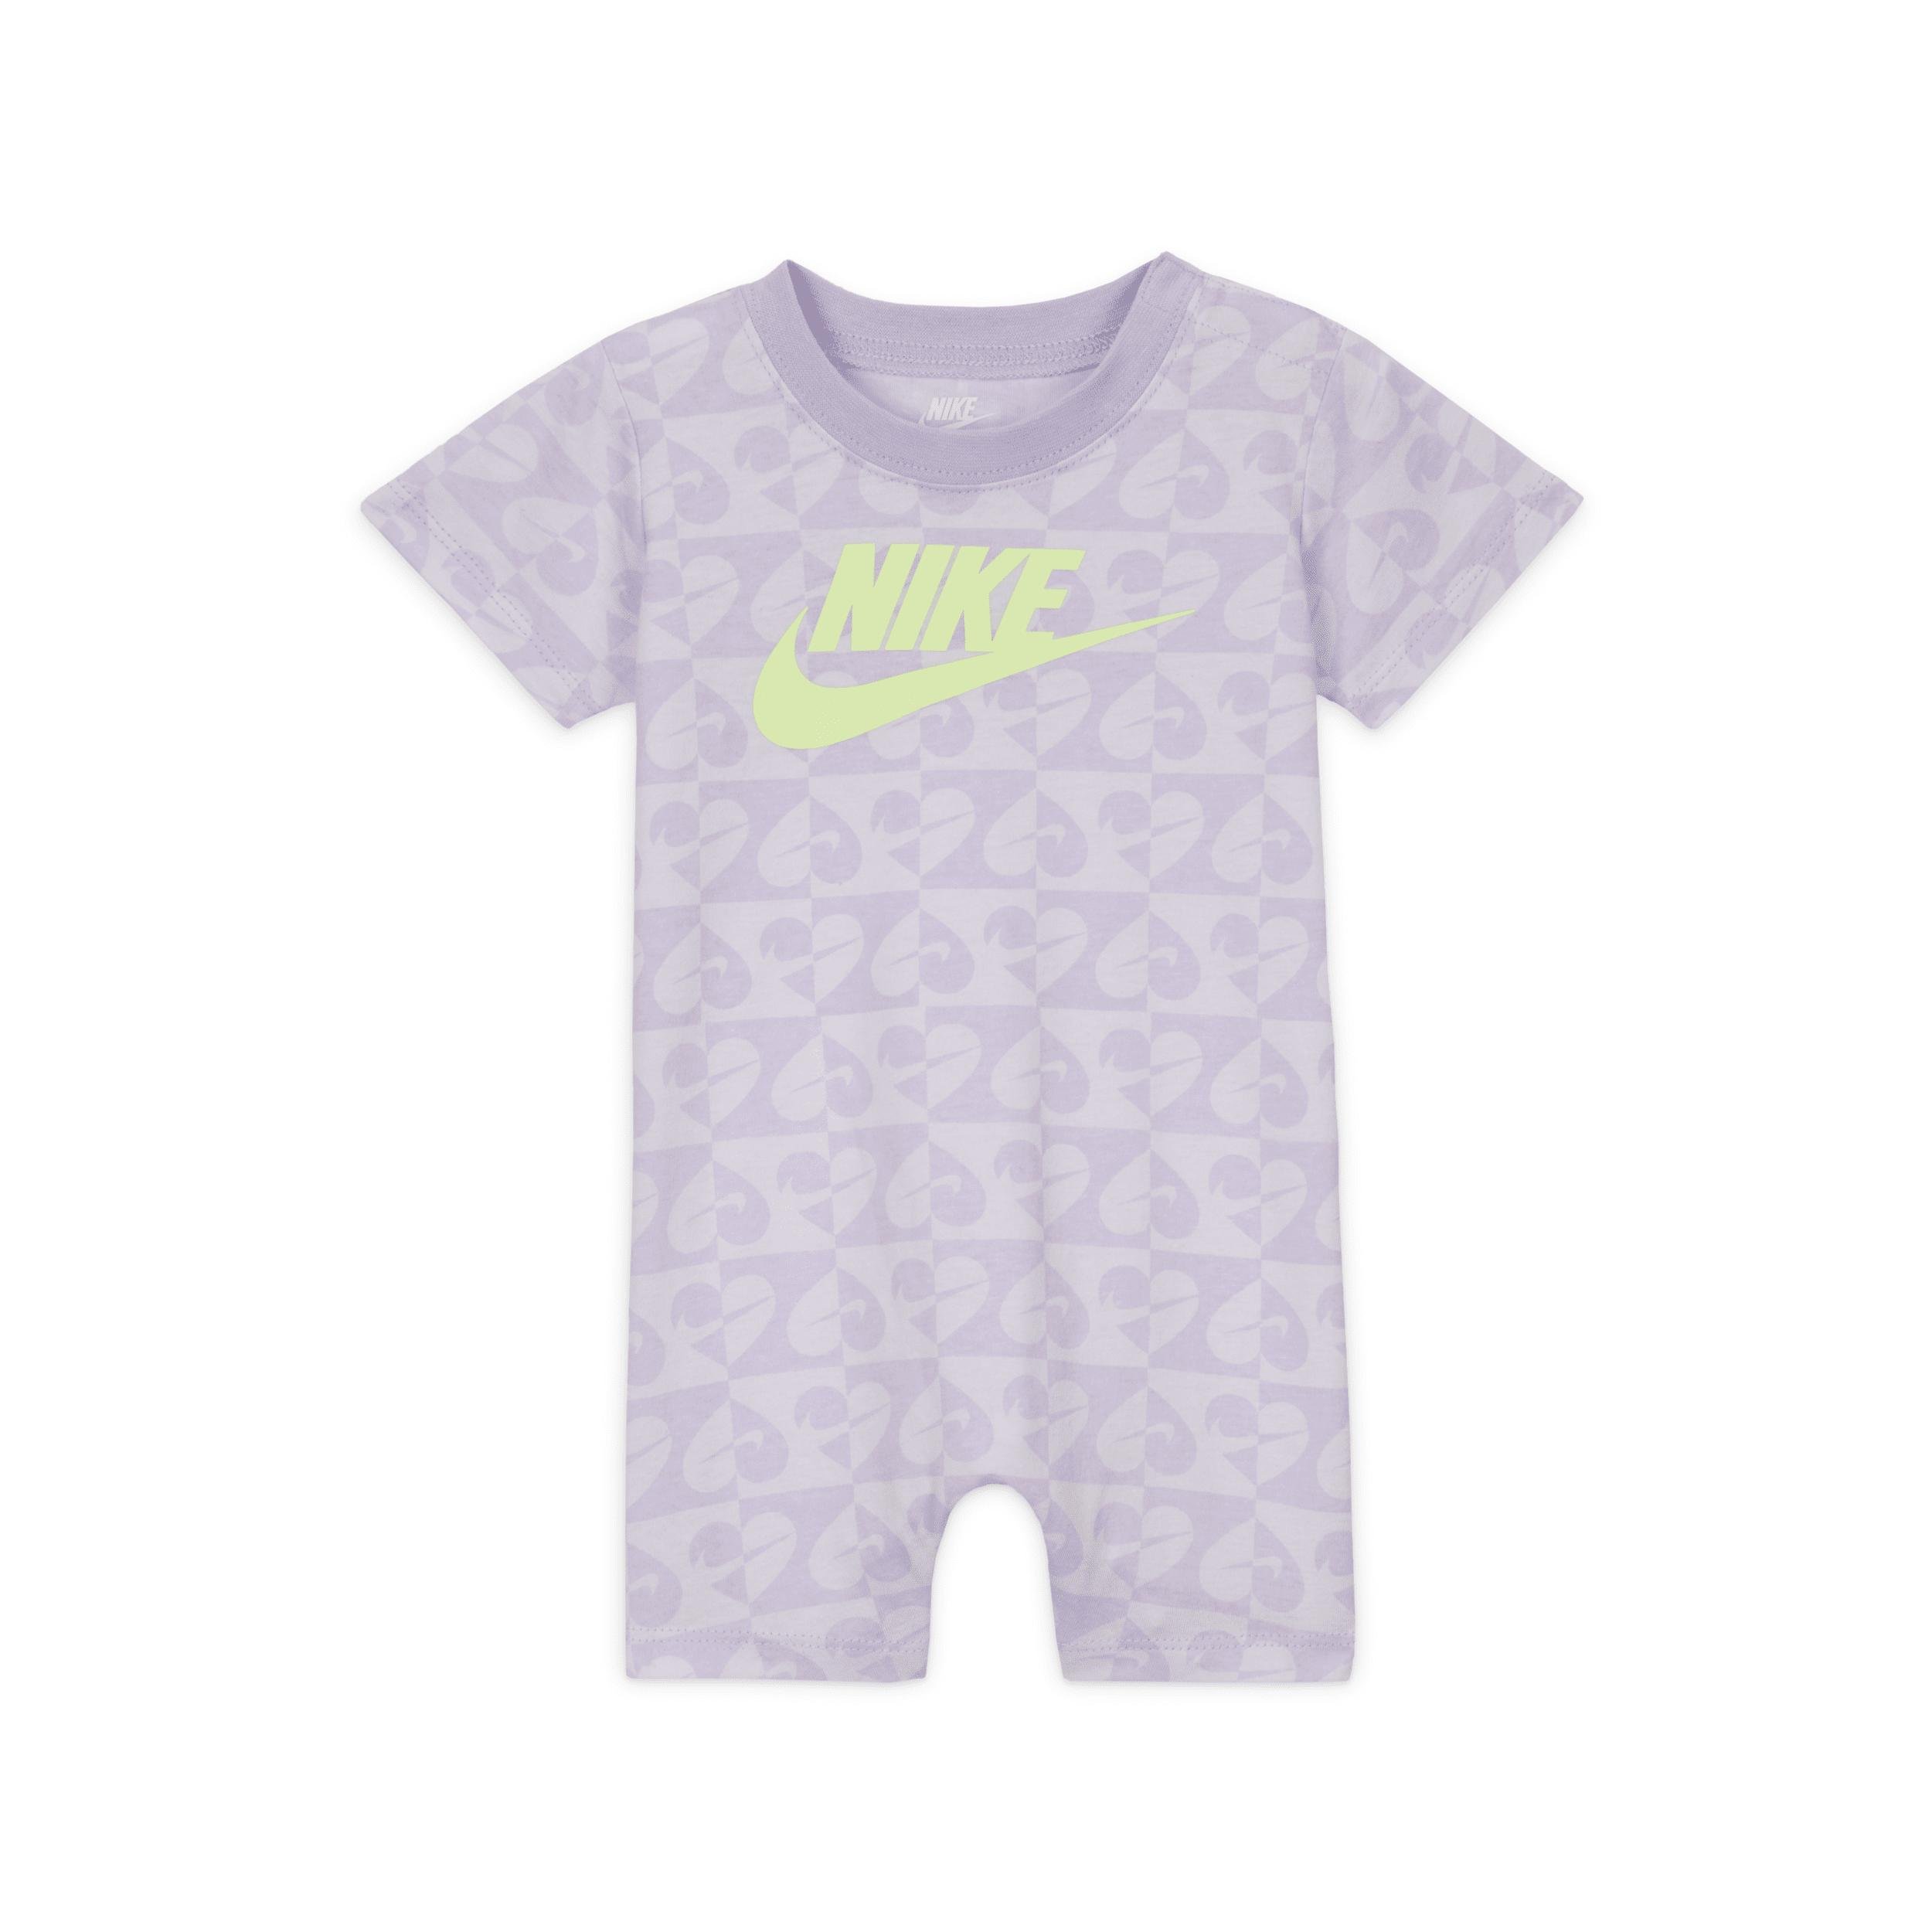 Nike Sweet Swoosh Baby (0-9M) Romper by NIKE